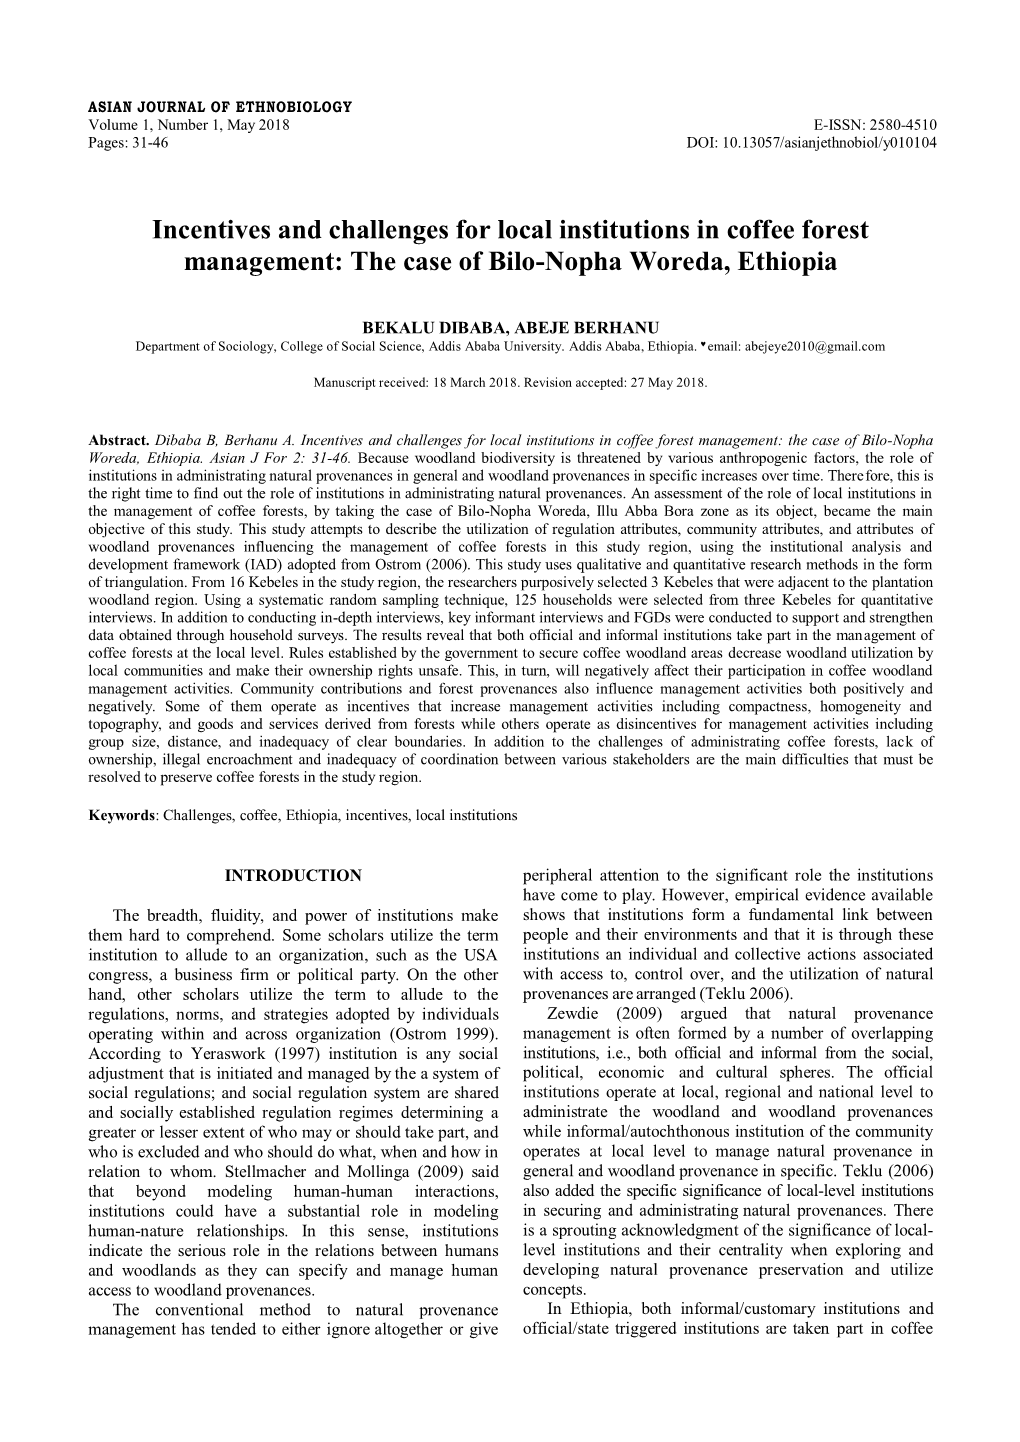 The Case of Bilo-Nopha Woreda, Ethiopia